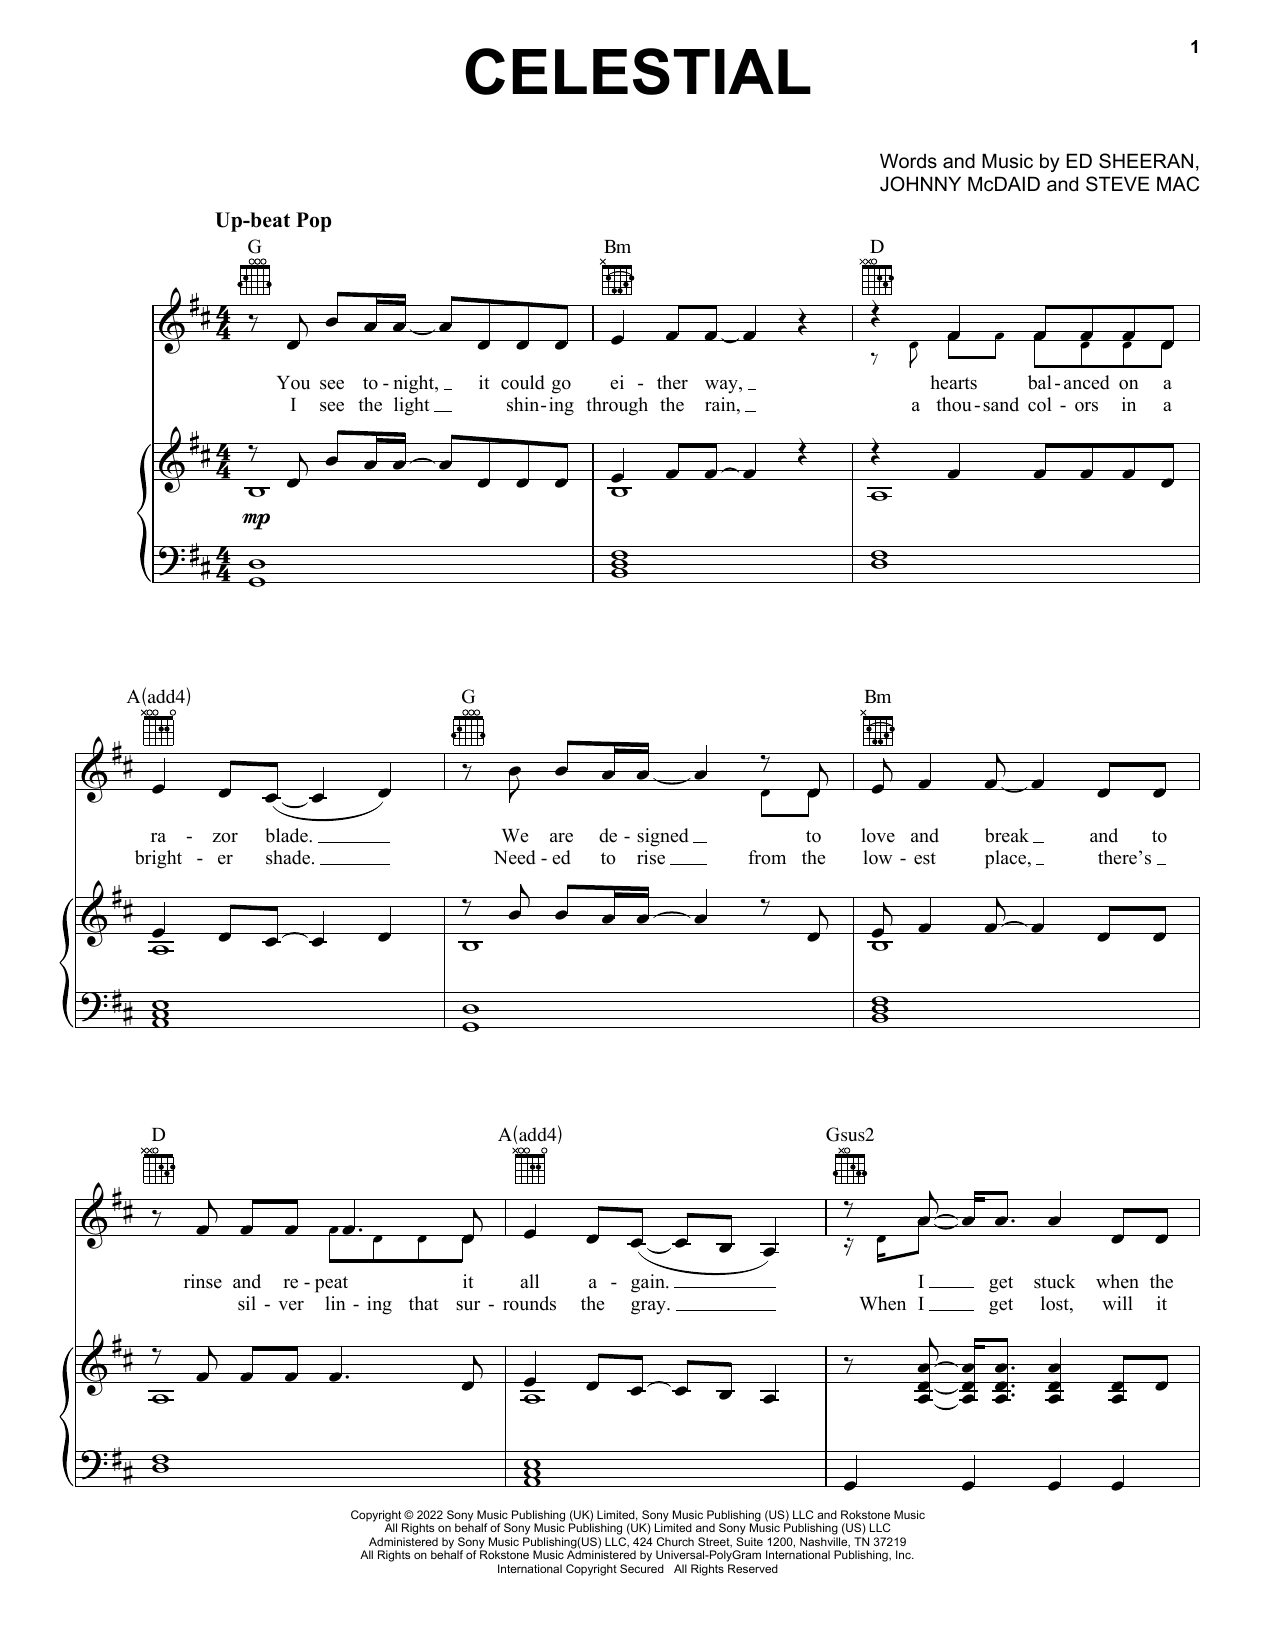 Ed Sheeran Celestial Sheet Music Notes & Chords for Ukulele - Download or Print PDF